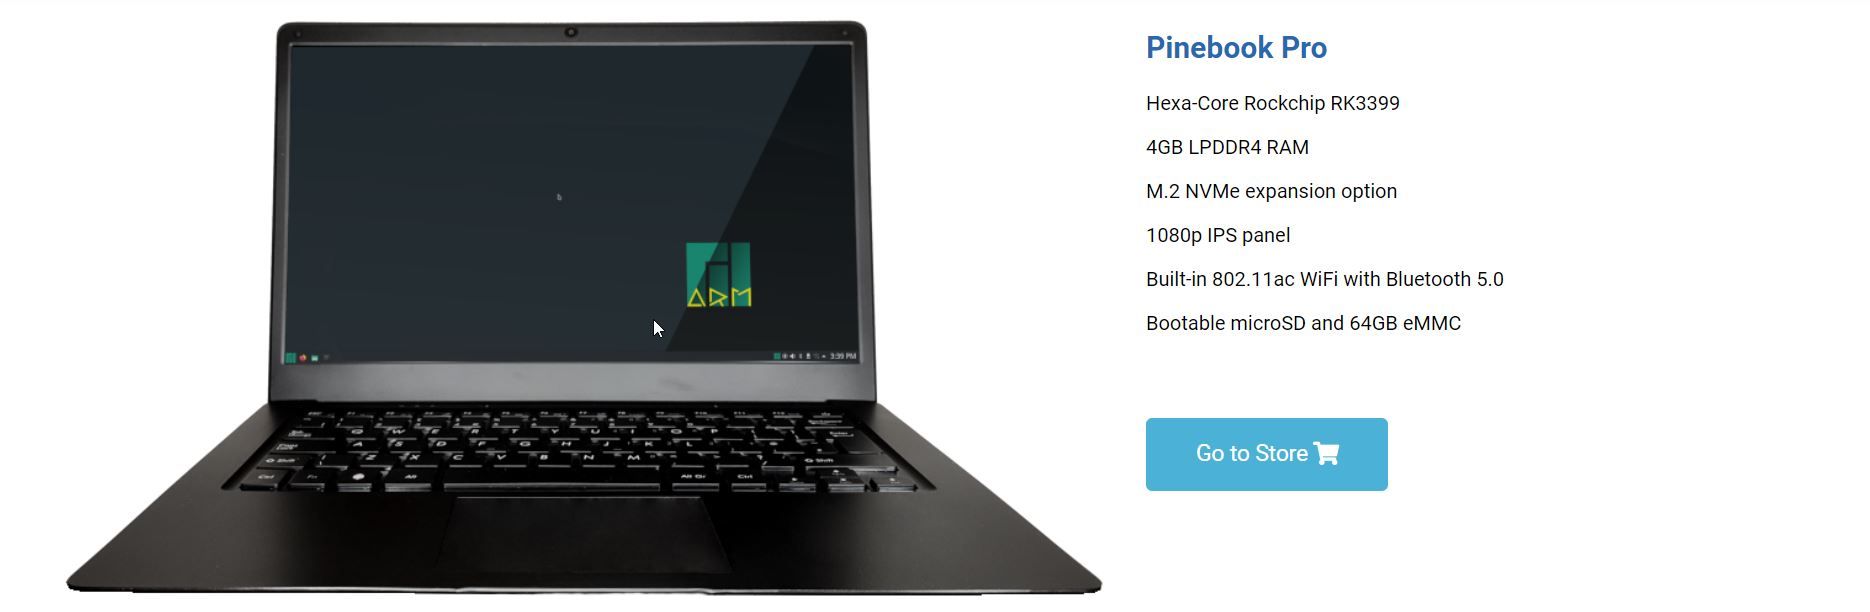 Hackable $219 Pinebook Pro Linux Laptop Back on Sale After